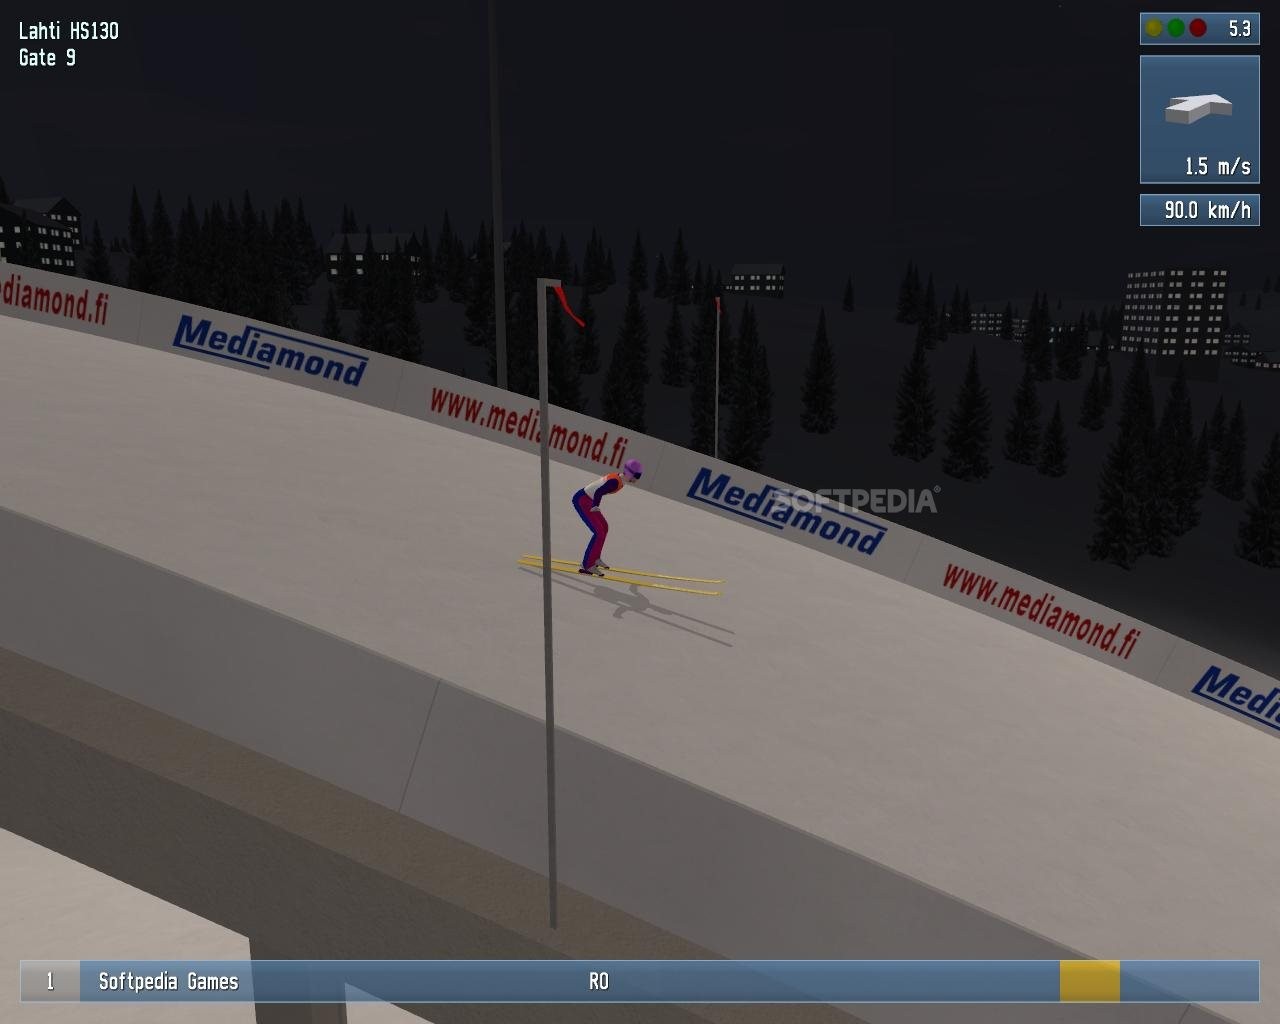 Deluxe ski jump 4 download full version